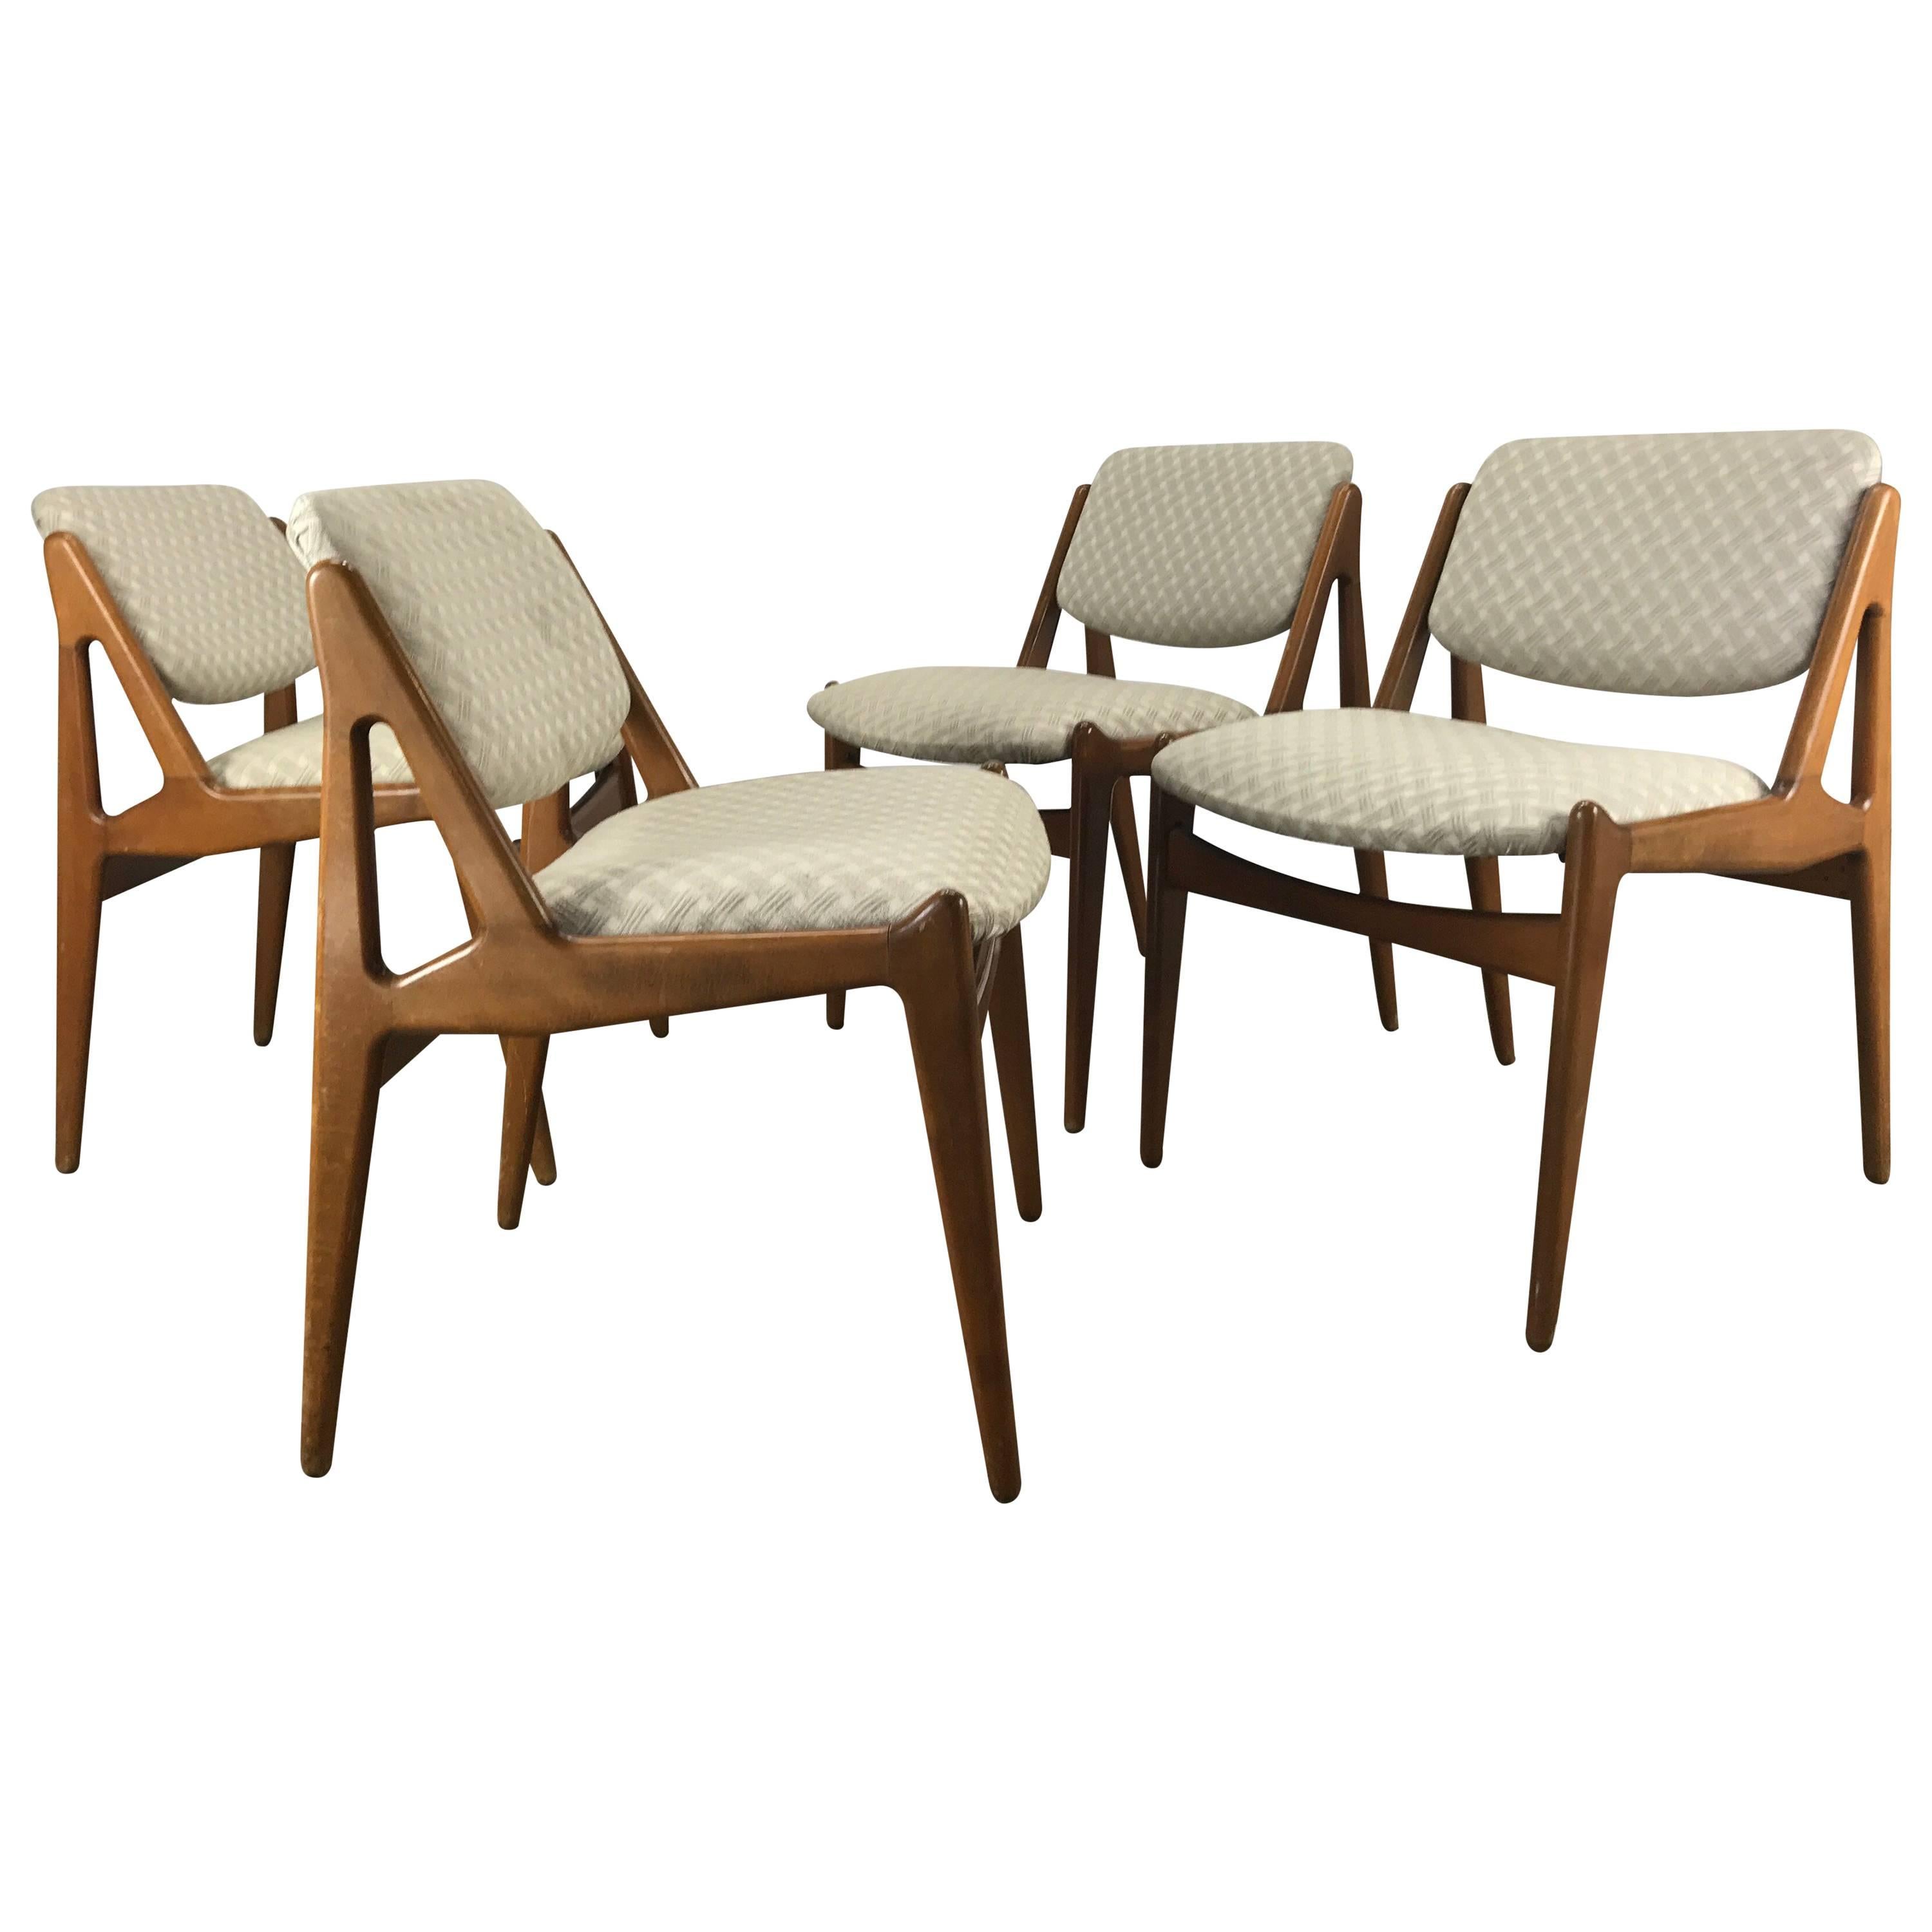 Set of Four Solid Sculptural Teak Dining Chairs by Arne Vodder, Denmark